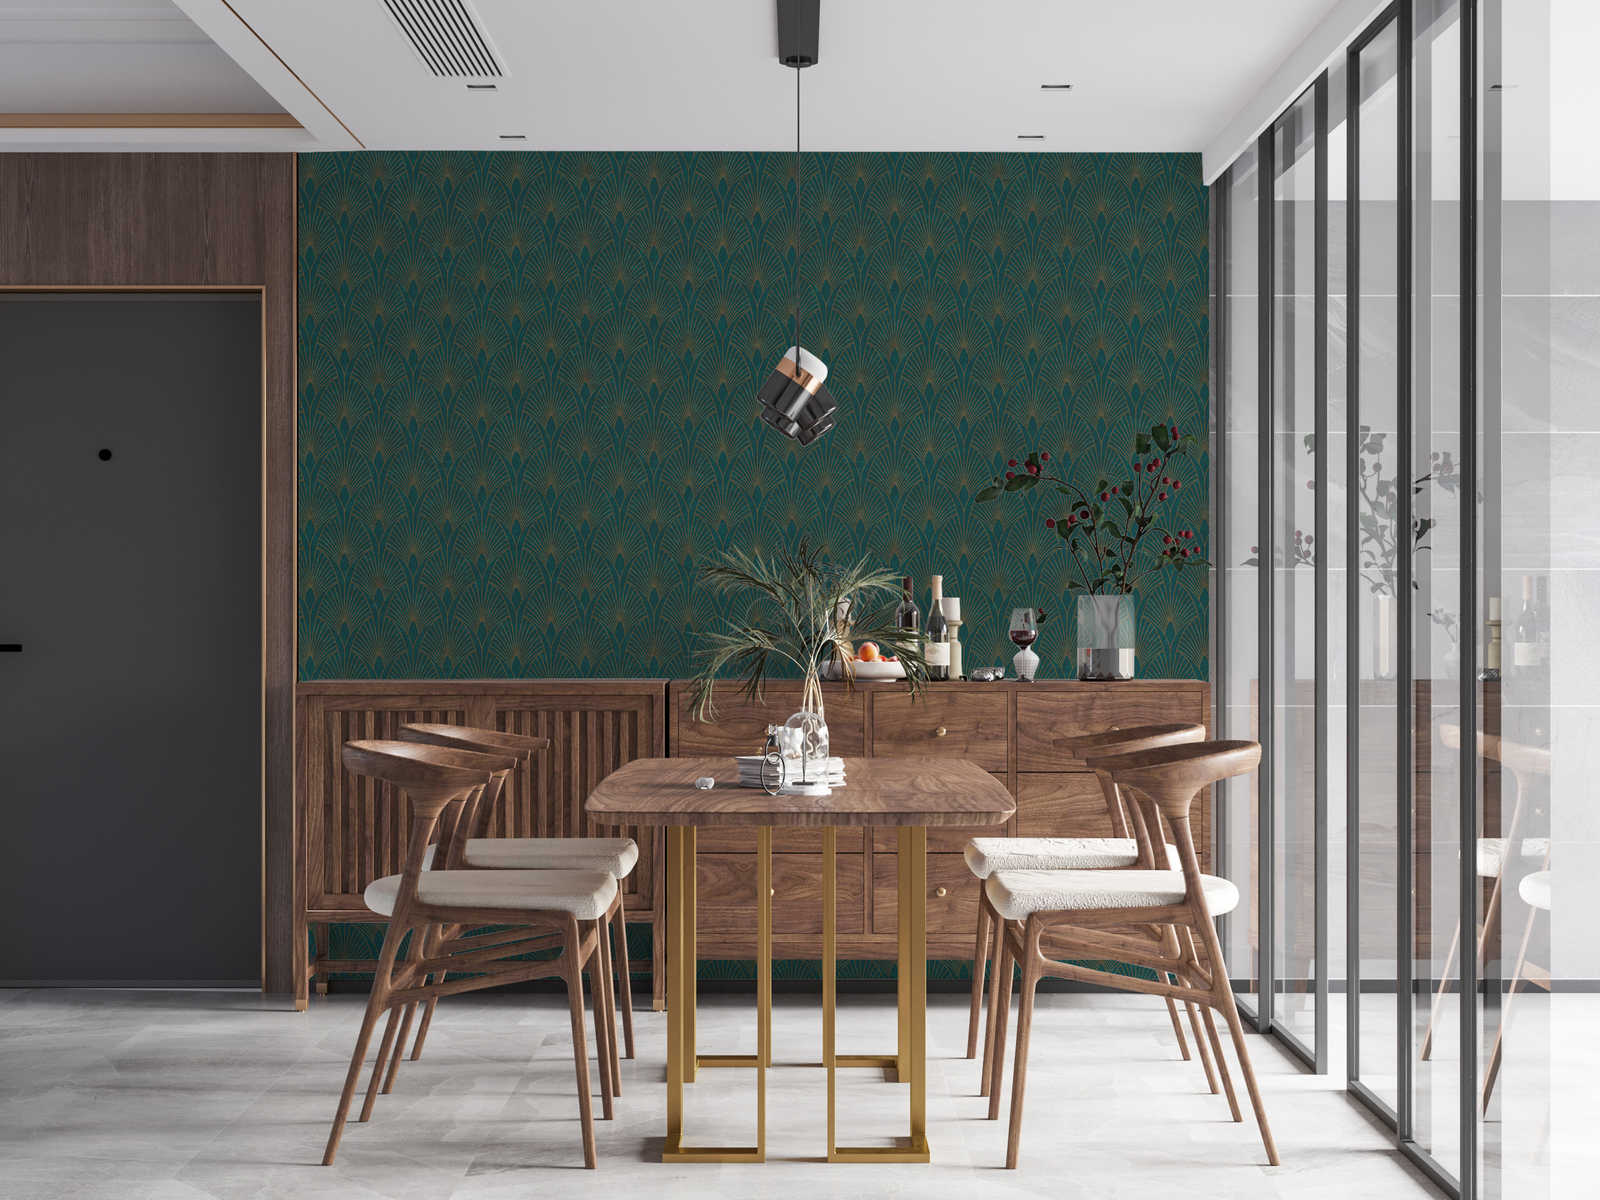             Self-adhesive wallpaper | Art Deco Design with Metallic Effect - Green, Metallic
        